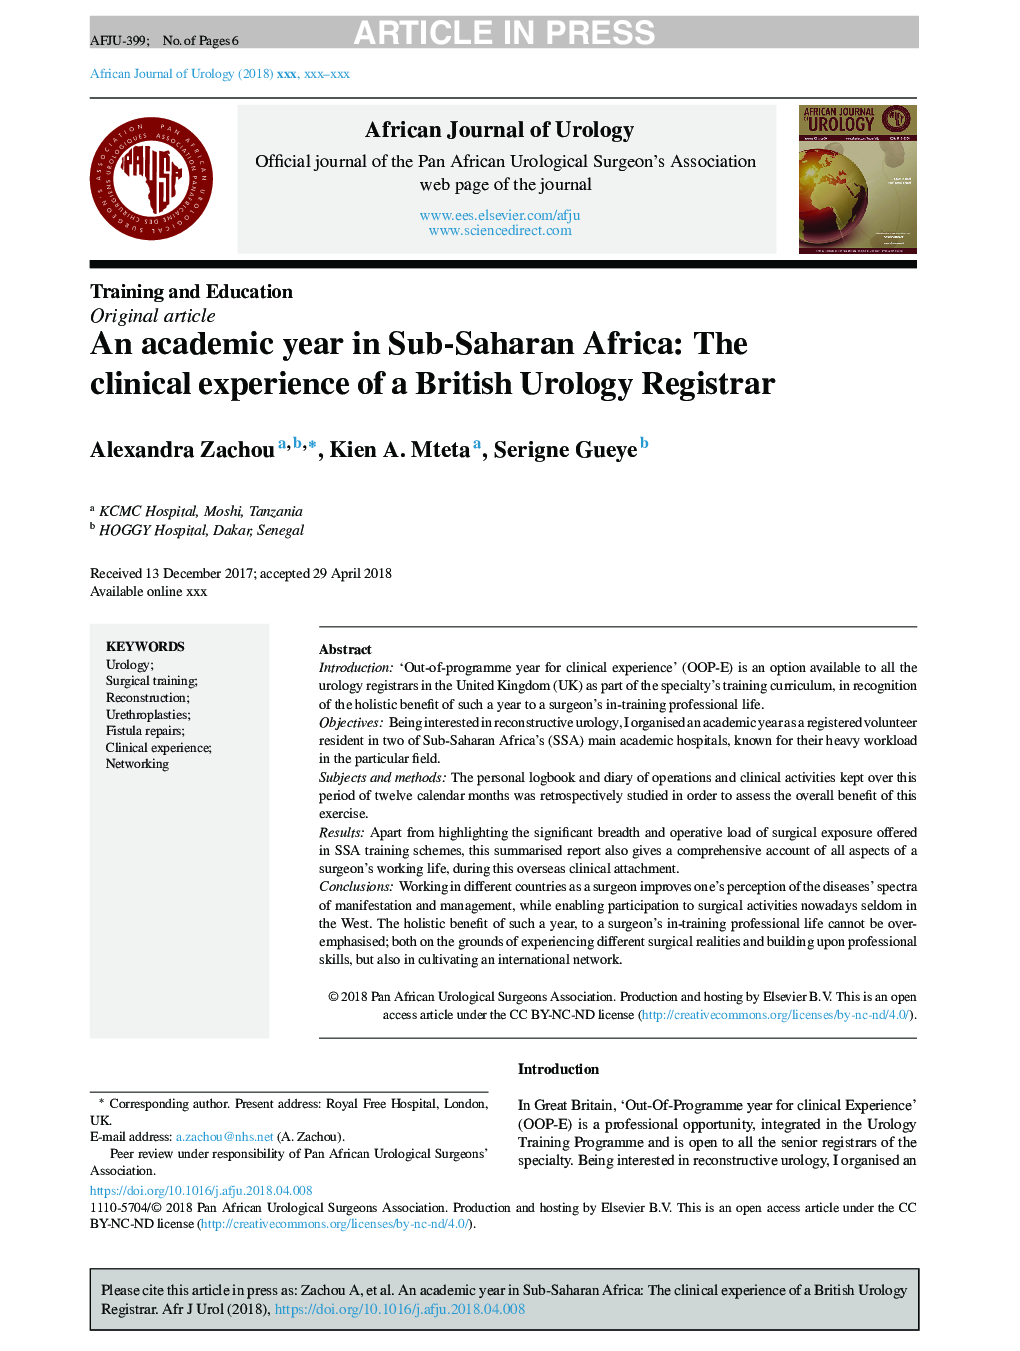 An academic year in Sub-Saharan Africa: The clinical experience of a British Urology Registrar